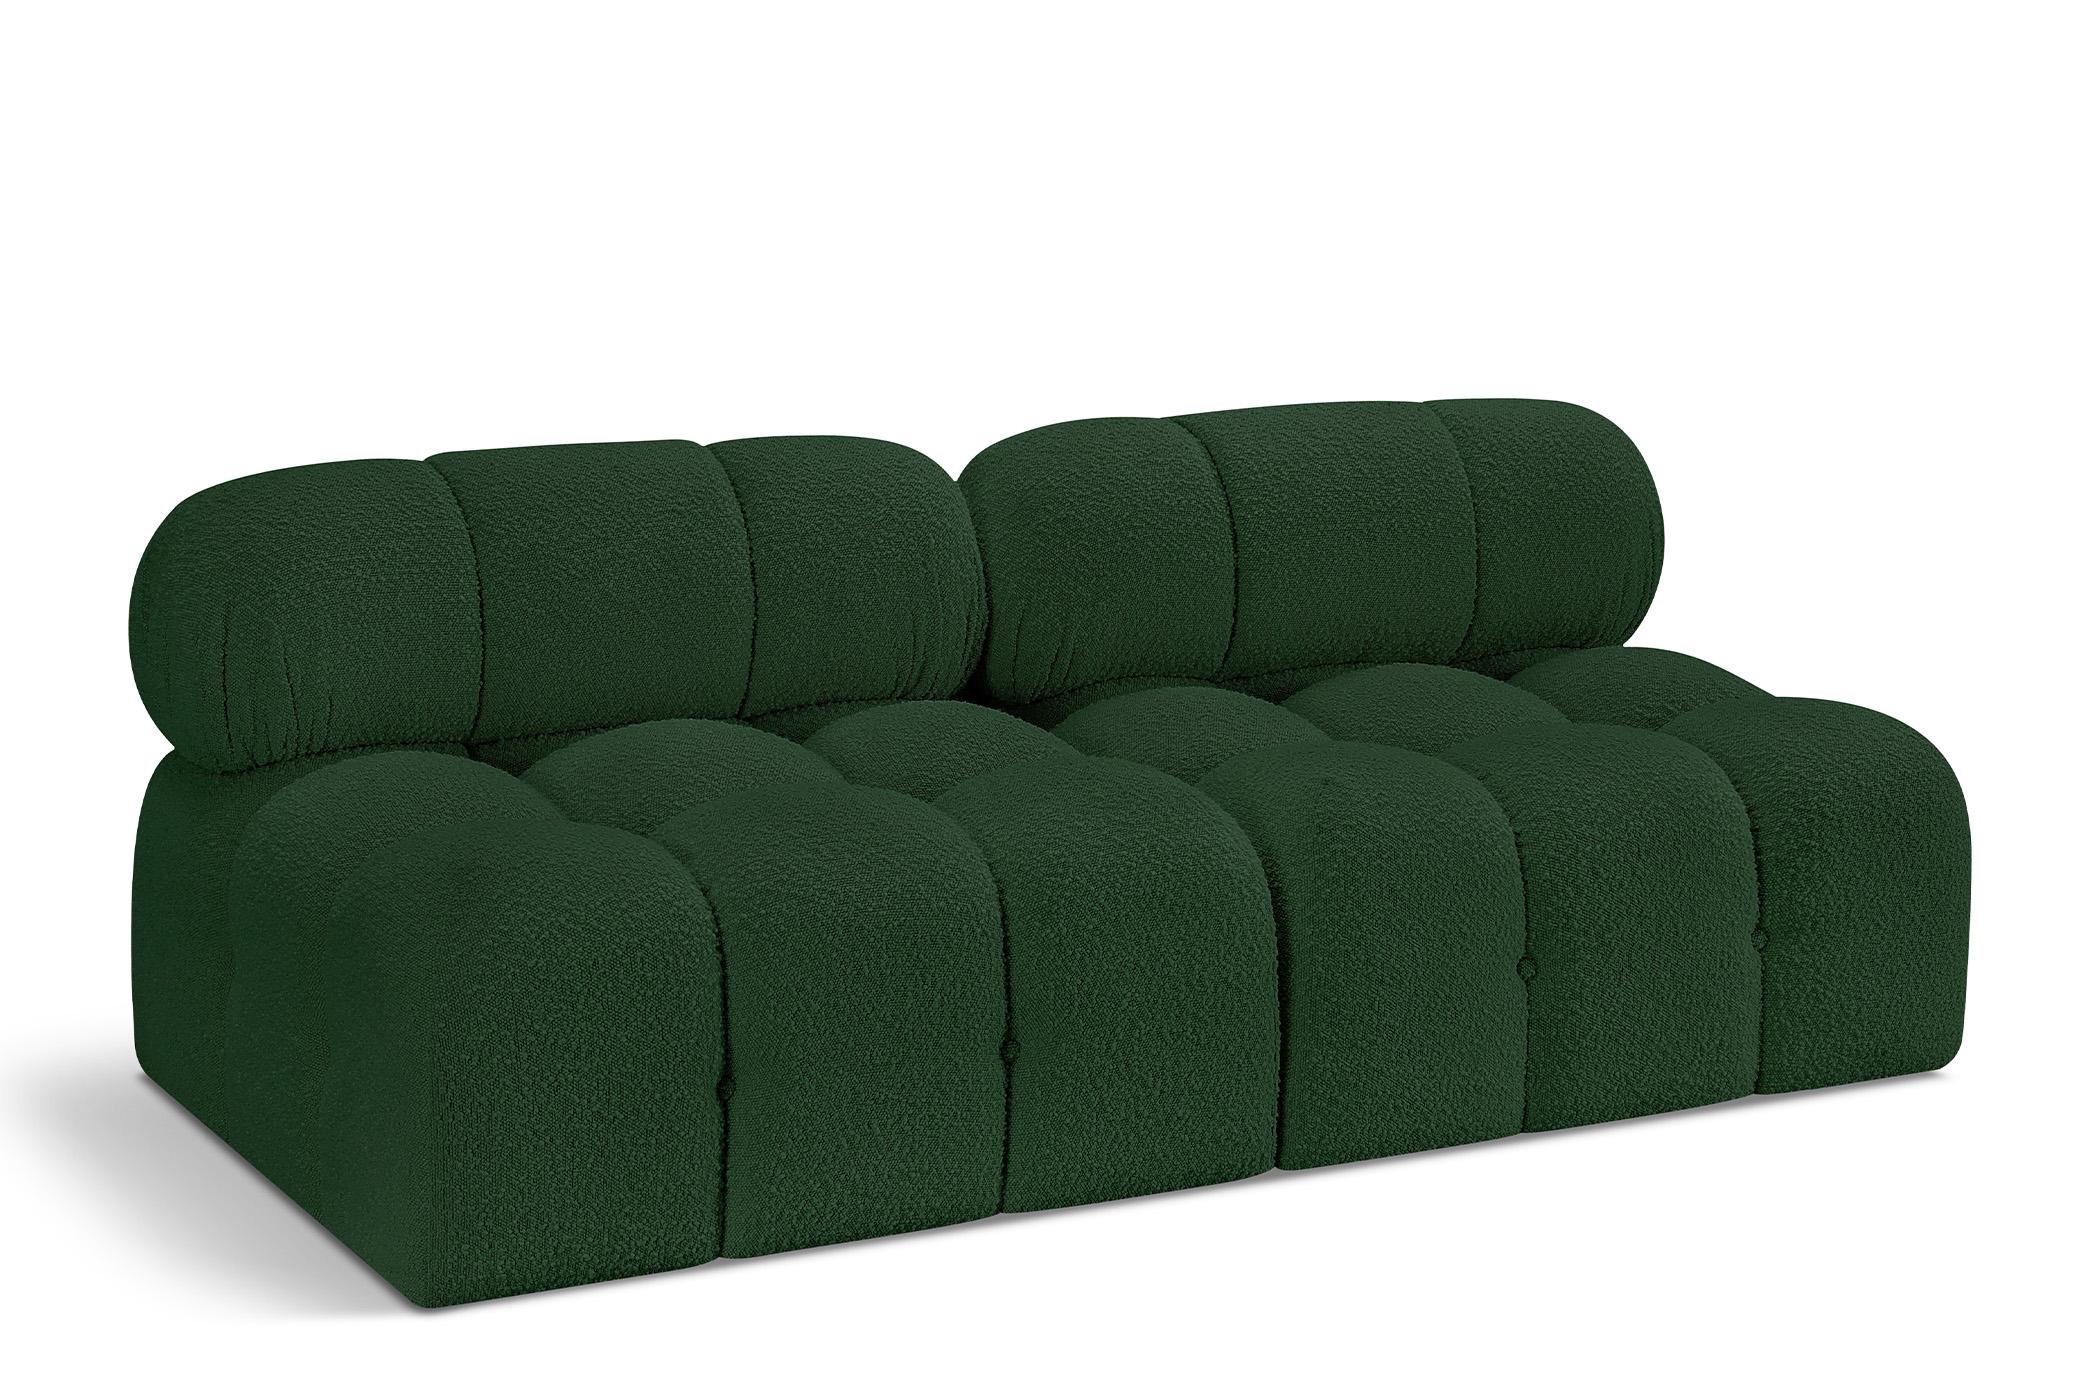 Contemporary, Modern Modular Sofa AMES 611Green-S68B 611Green-S68B in Green 